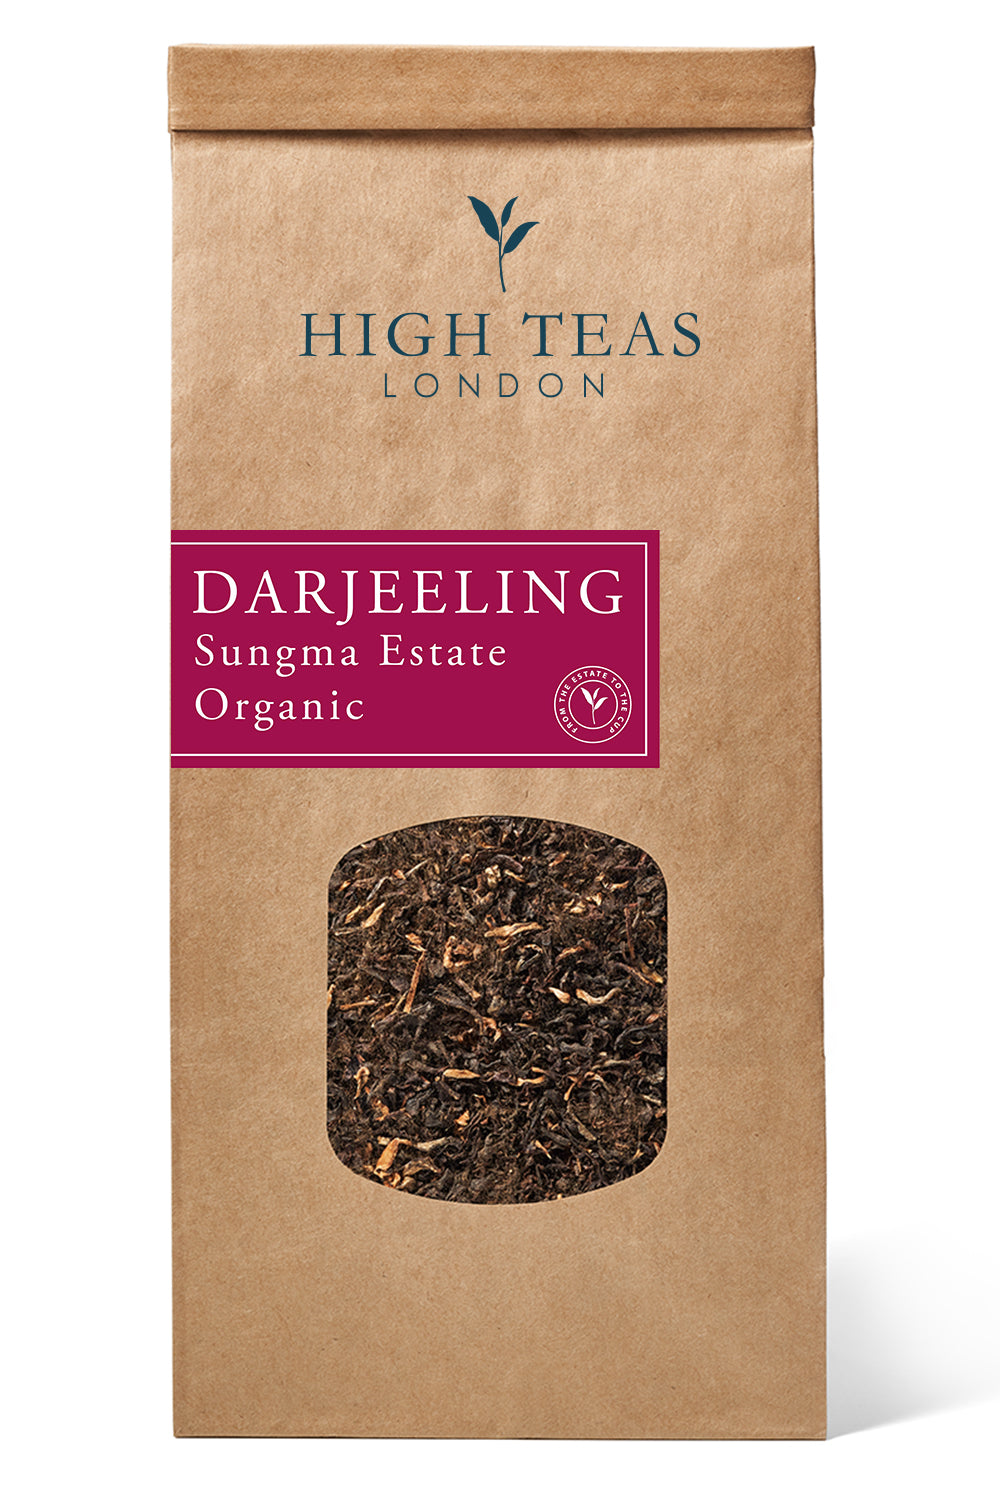 Darjeeling BPS Sungma Estate Organic-250g-Loose Leaf Tea-High Teas